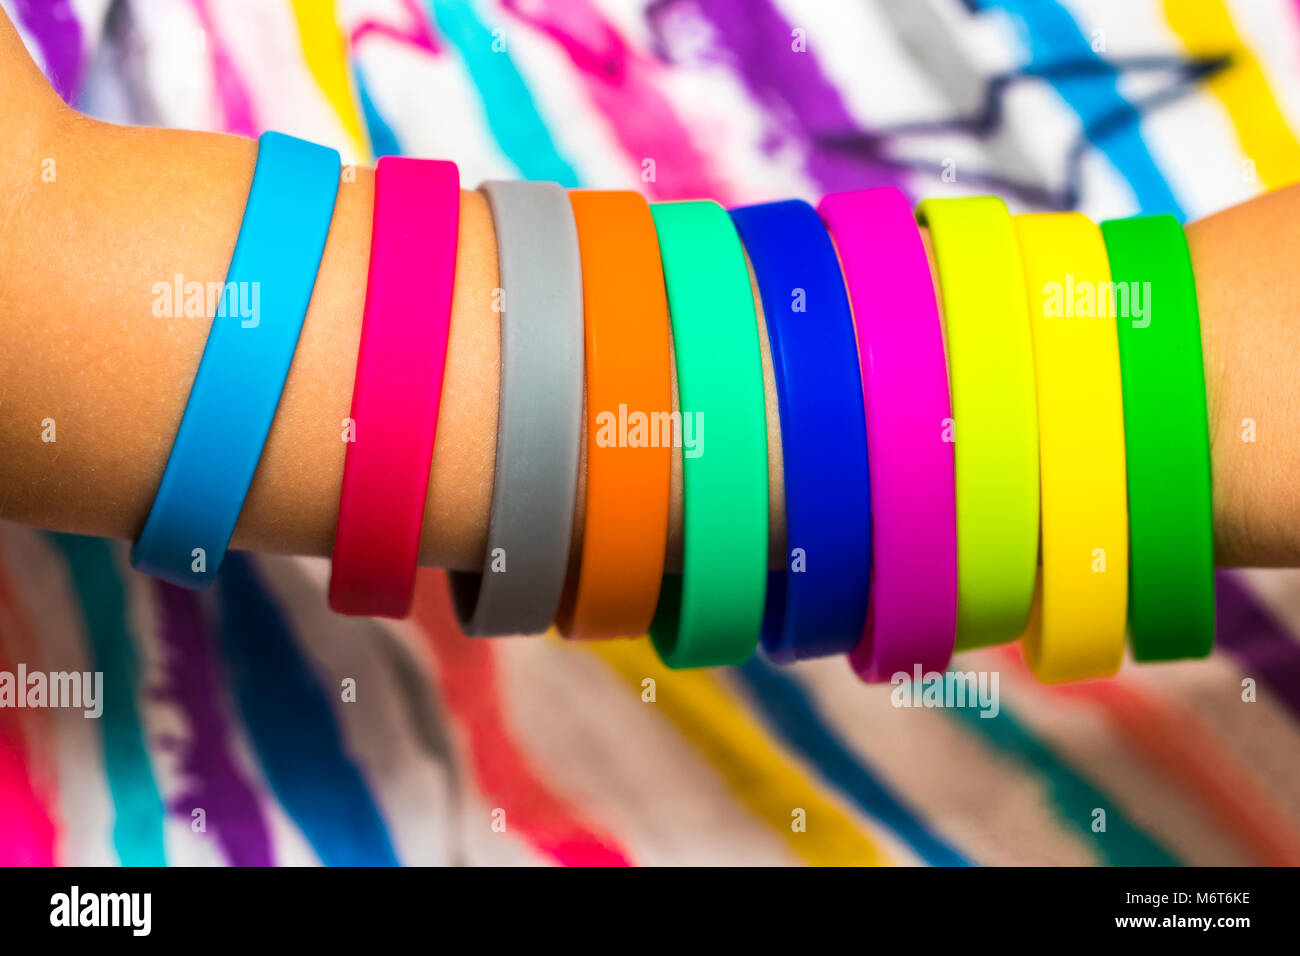 Immagini Stock - Rainbow Colors, Elastici Elastico In Silicone.  Braccialetti Elastici Colorati.. Image 67647669